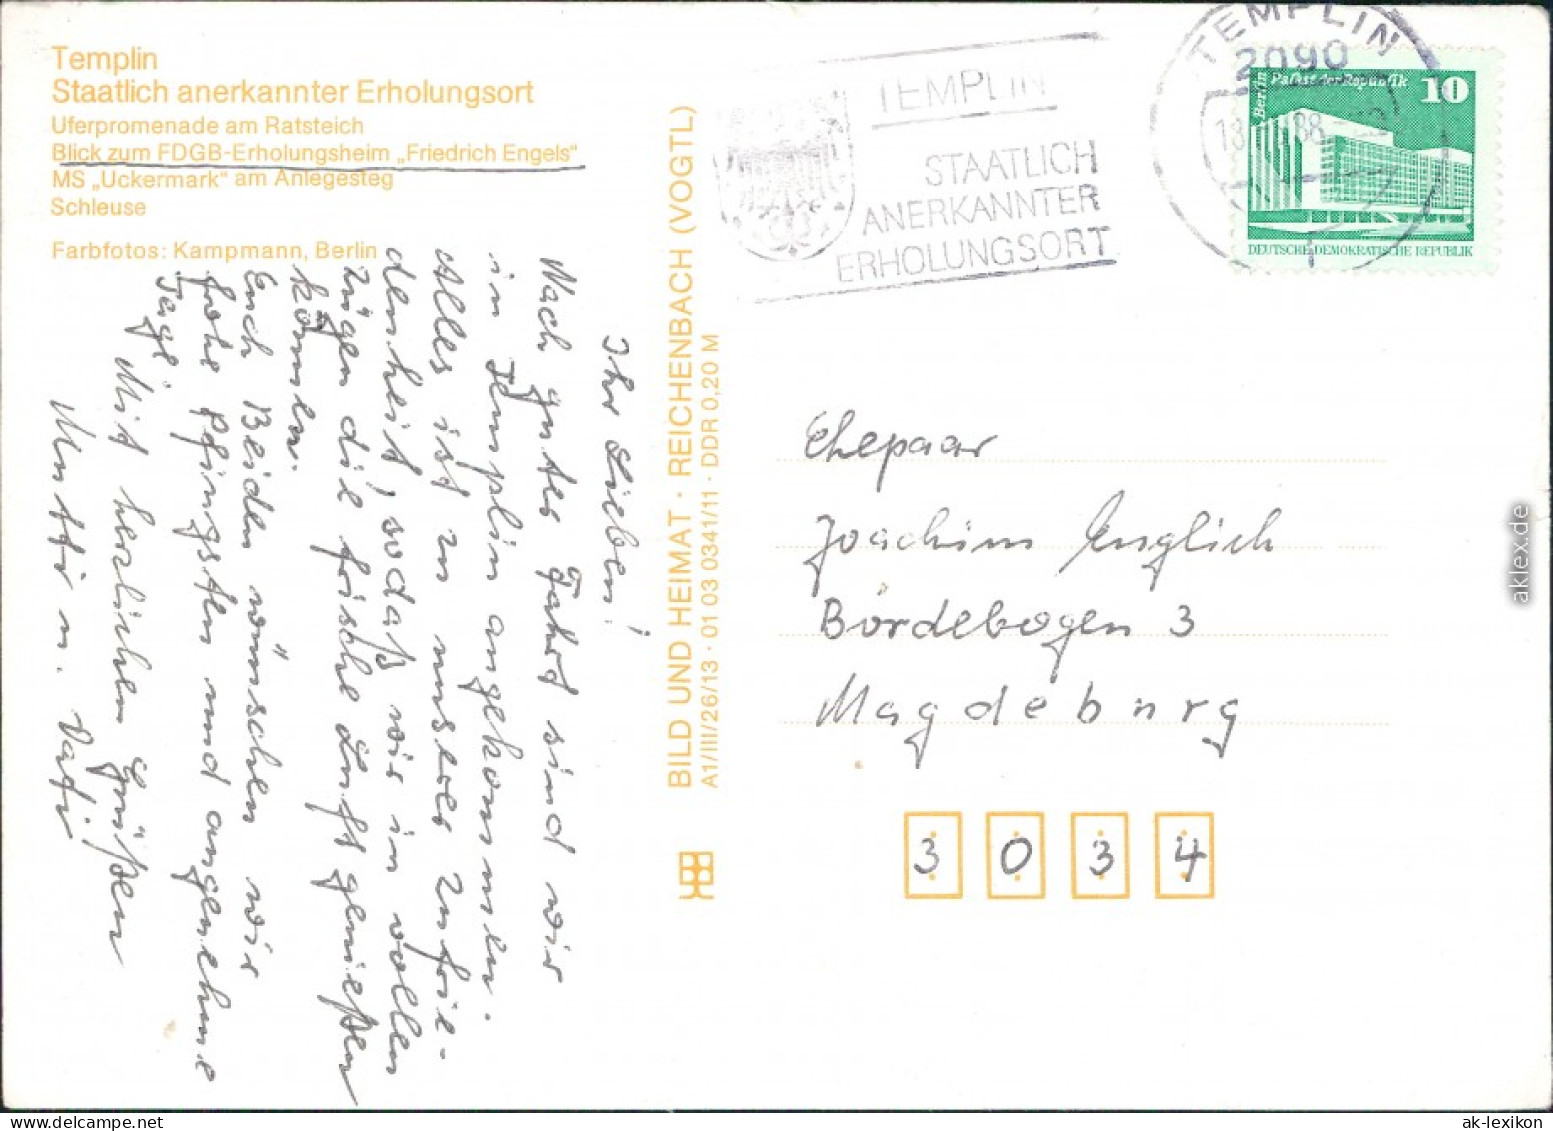 Templin Uferpromenade  FDGB-Erholungsheim Friedrich Engels, MS Uckermark  1988 - Templin